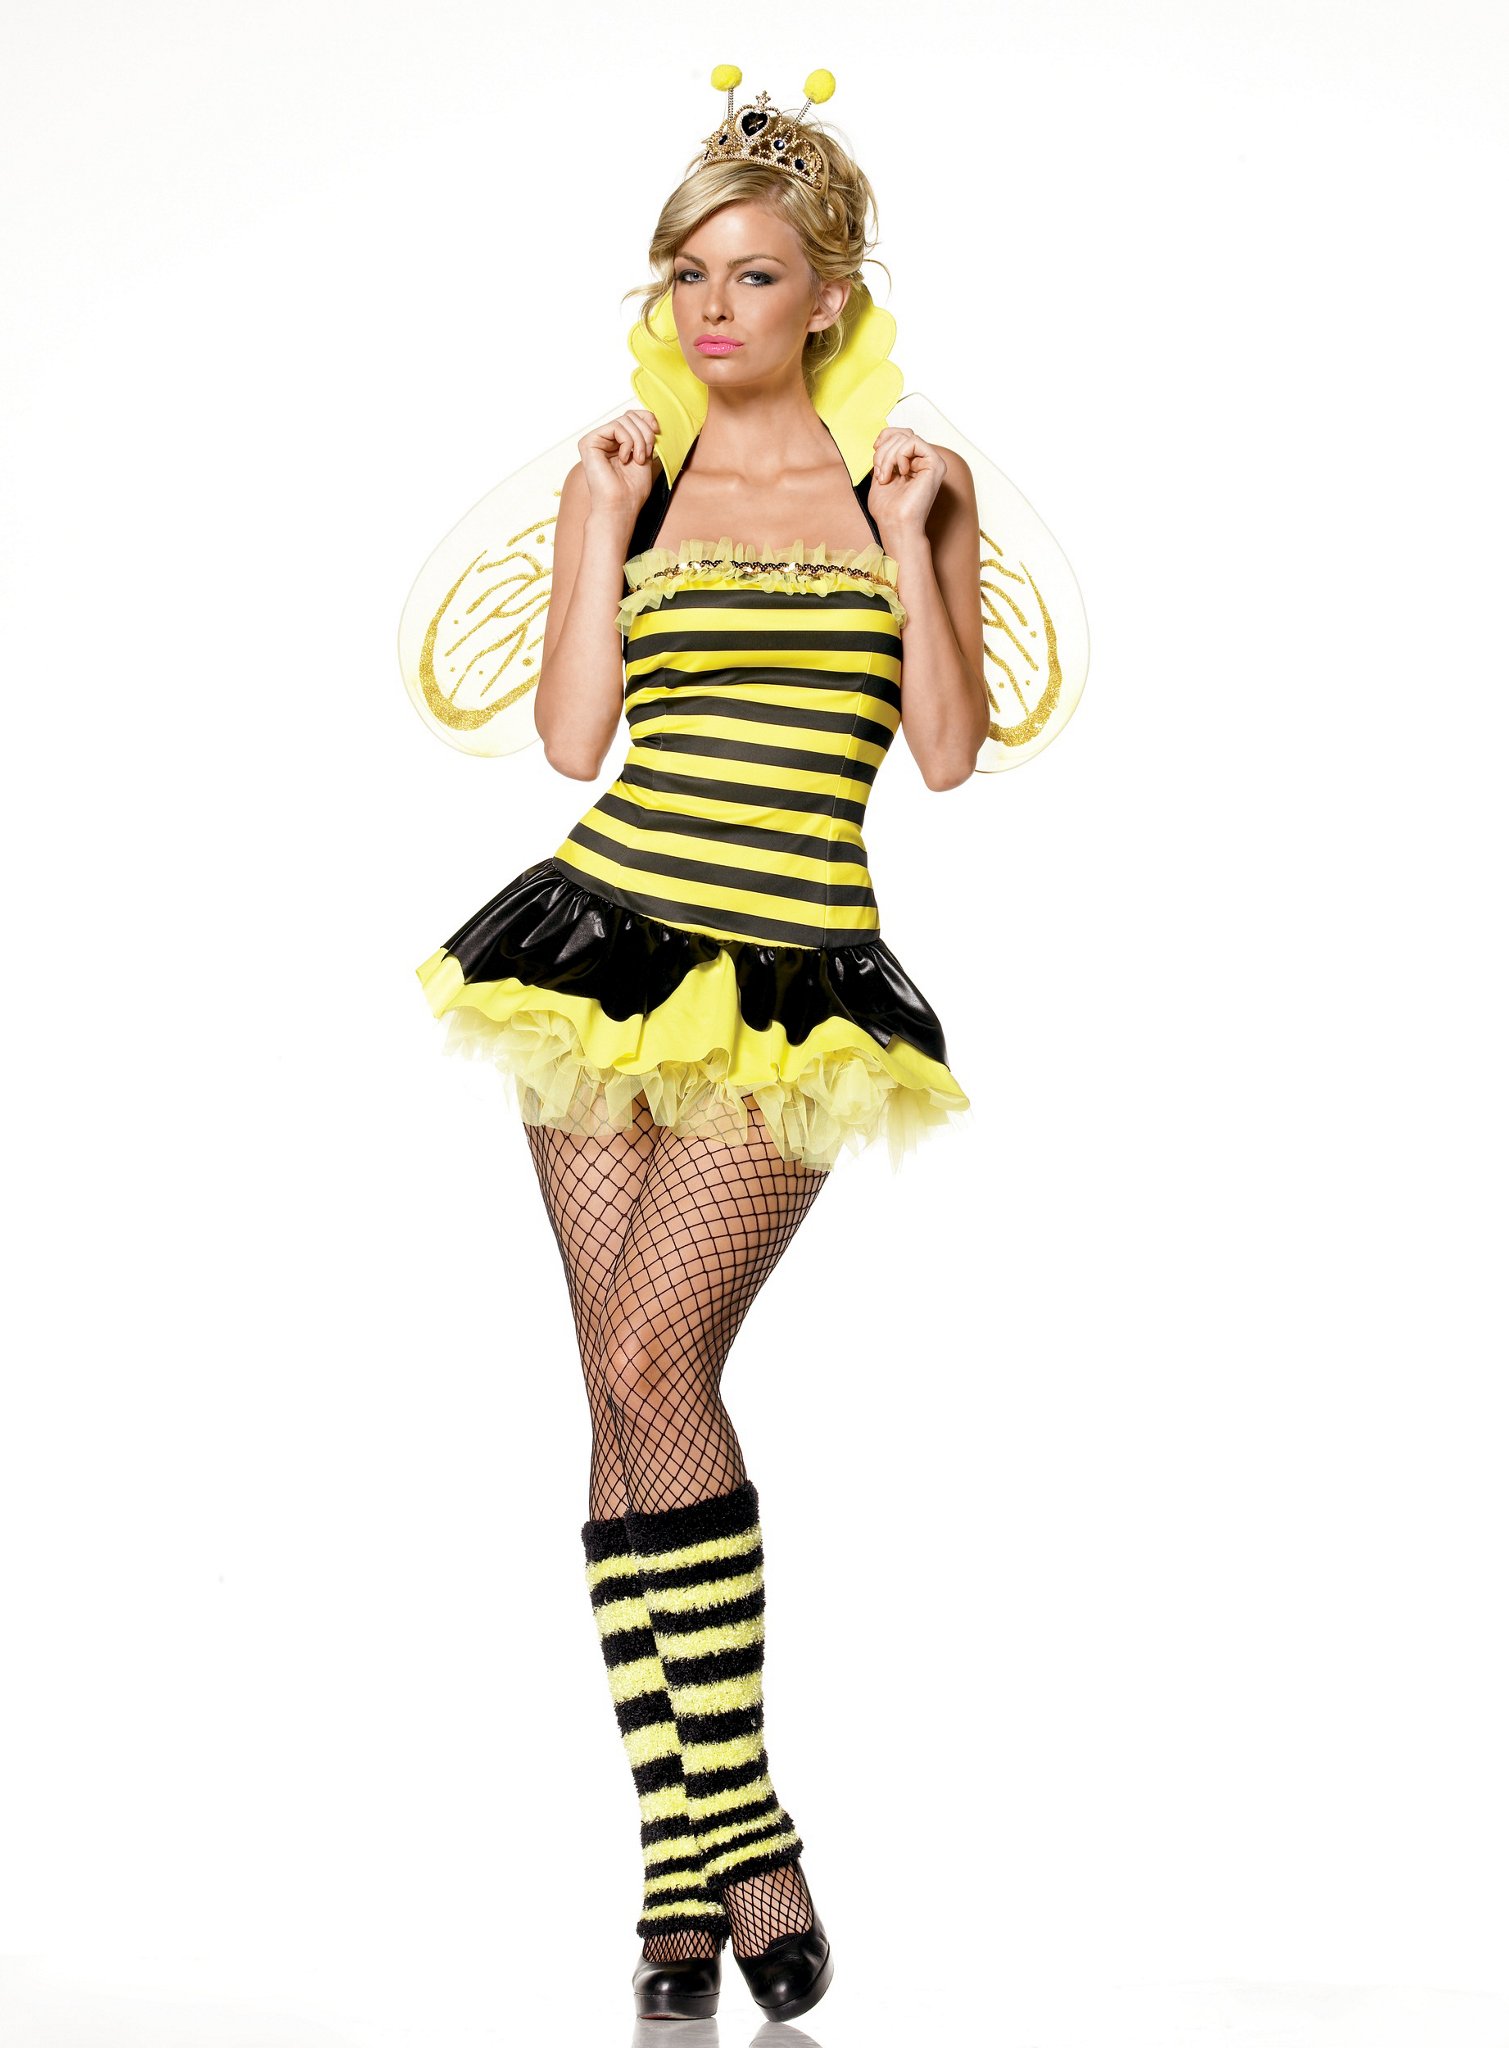 https://i.mmo.cm/is/image/mmoimg/mmo-markets/300168-sexy-bienenkoenigin-kostuem-queen-bumble-bee-costume.jpg